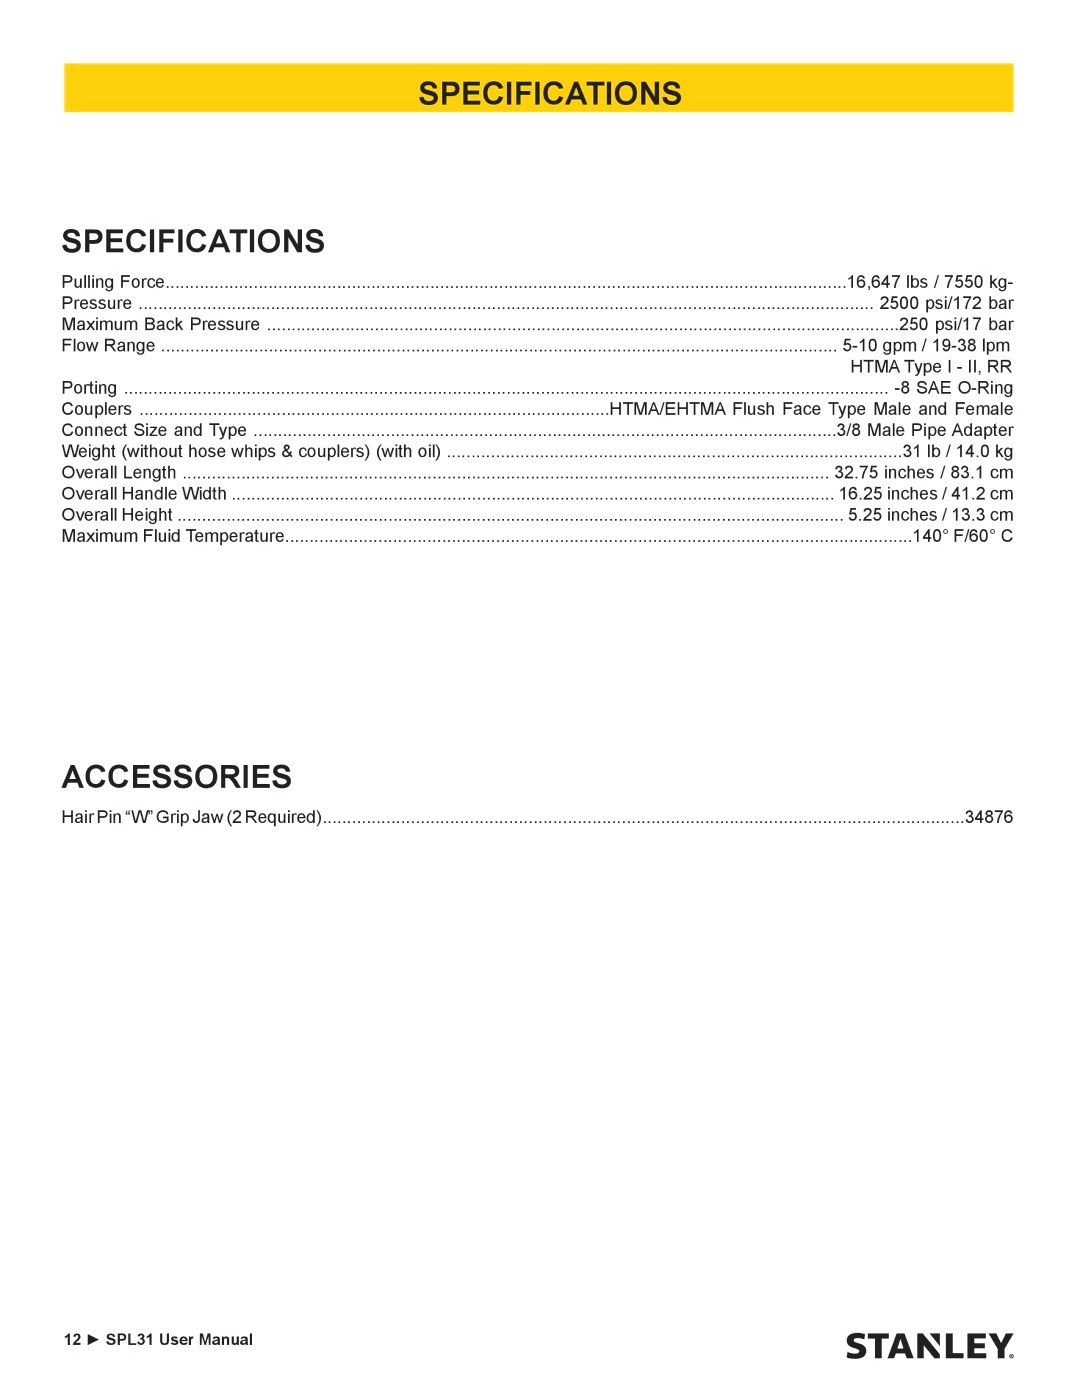 Stanley Black & Decker SPL31A-N, SPL31A-S user manual Specifications, Accessories 